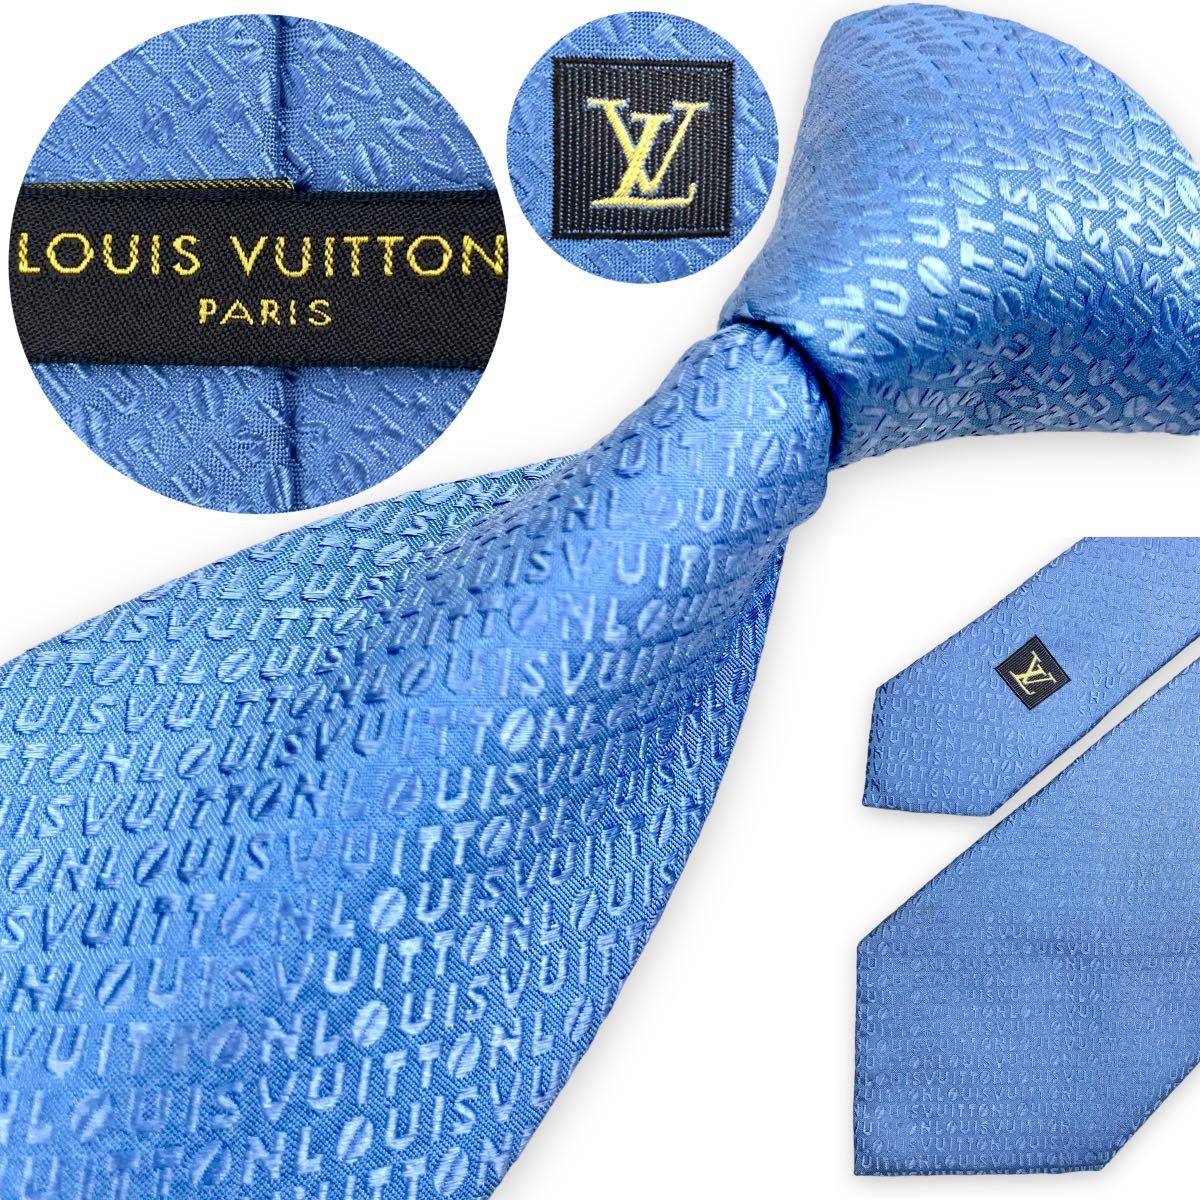 LOUIS VUITTON LV ルイヴィトン ブランド シルク ネクタイ 文字 ロゴ ...